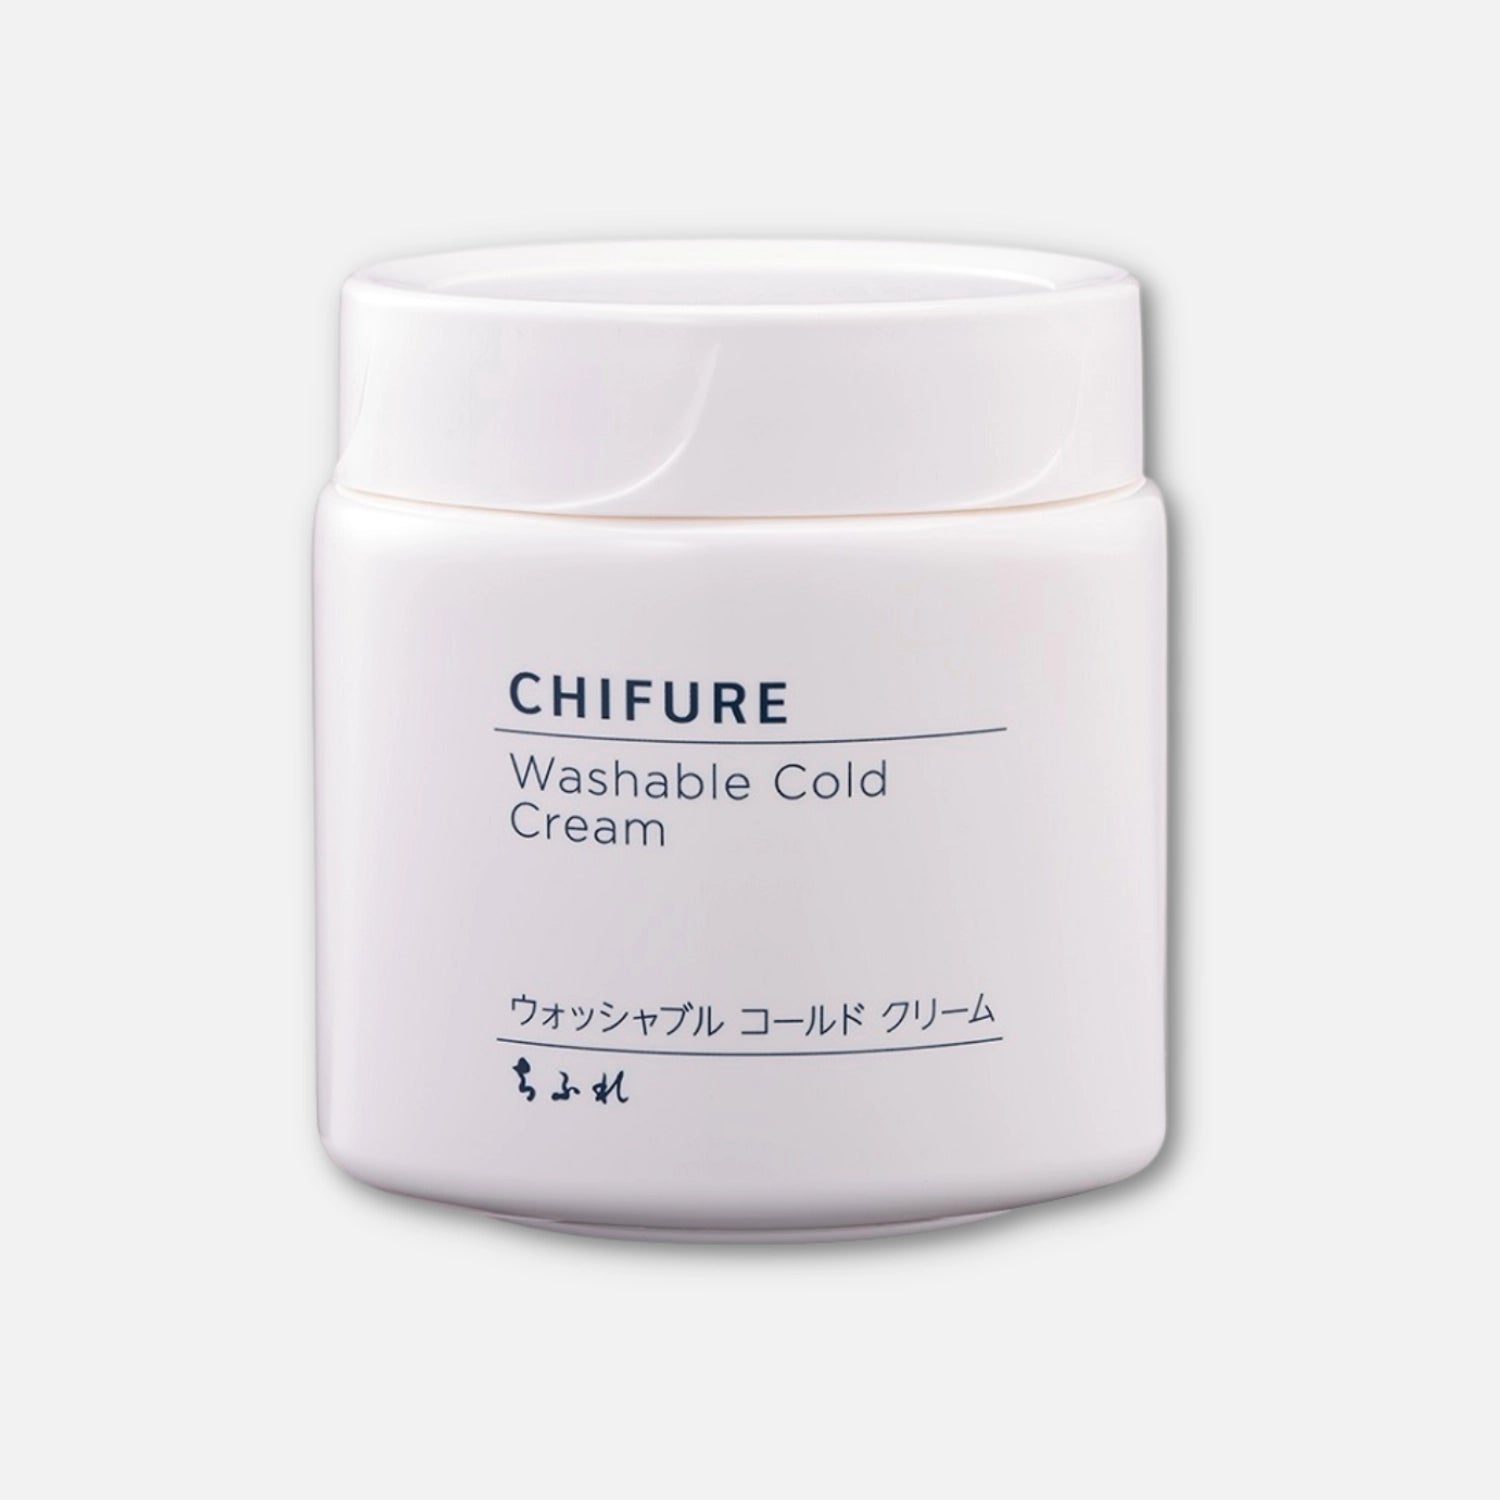 Chifure Washable Cold Cream 300g - Buy Me Japan